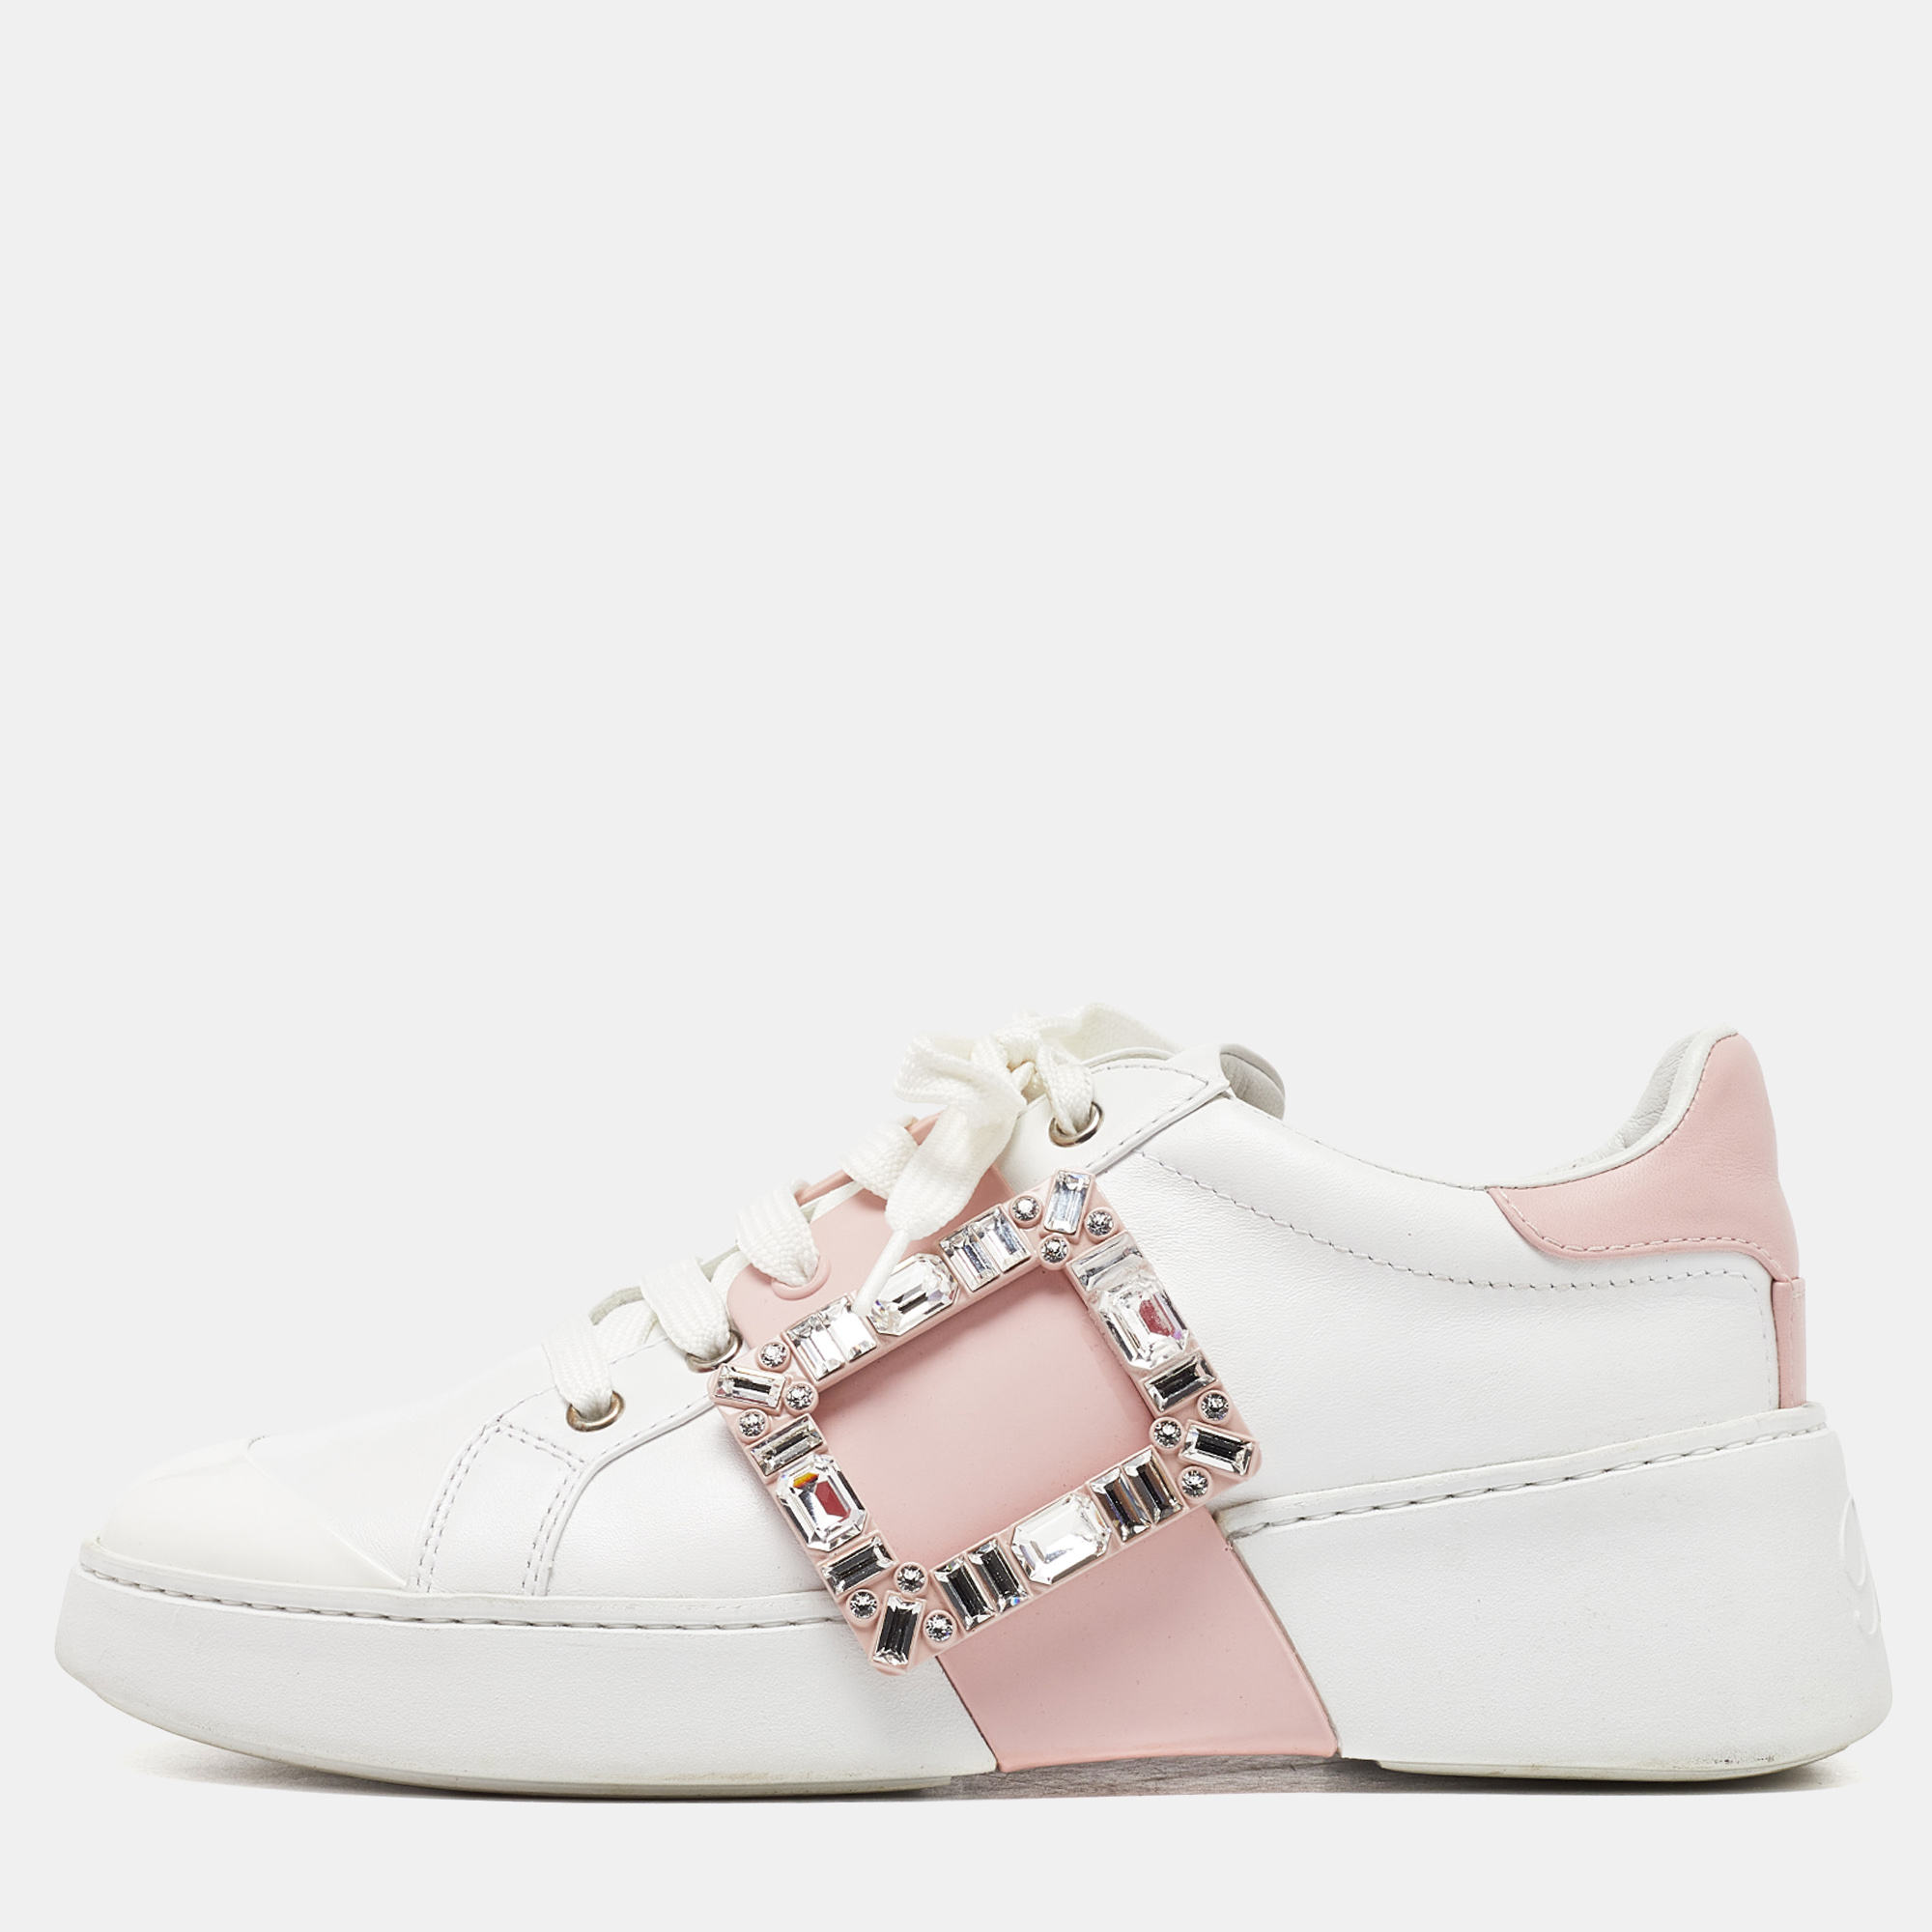 

Roger Vivier White/Pink Leather Viv' Skate Crystal Embellished Low Top Sneakers Size